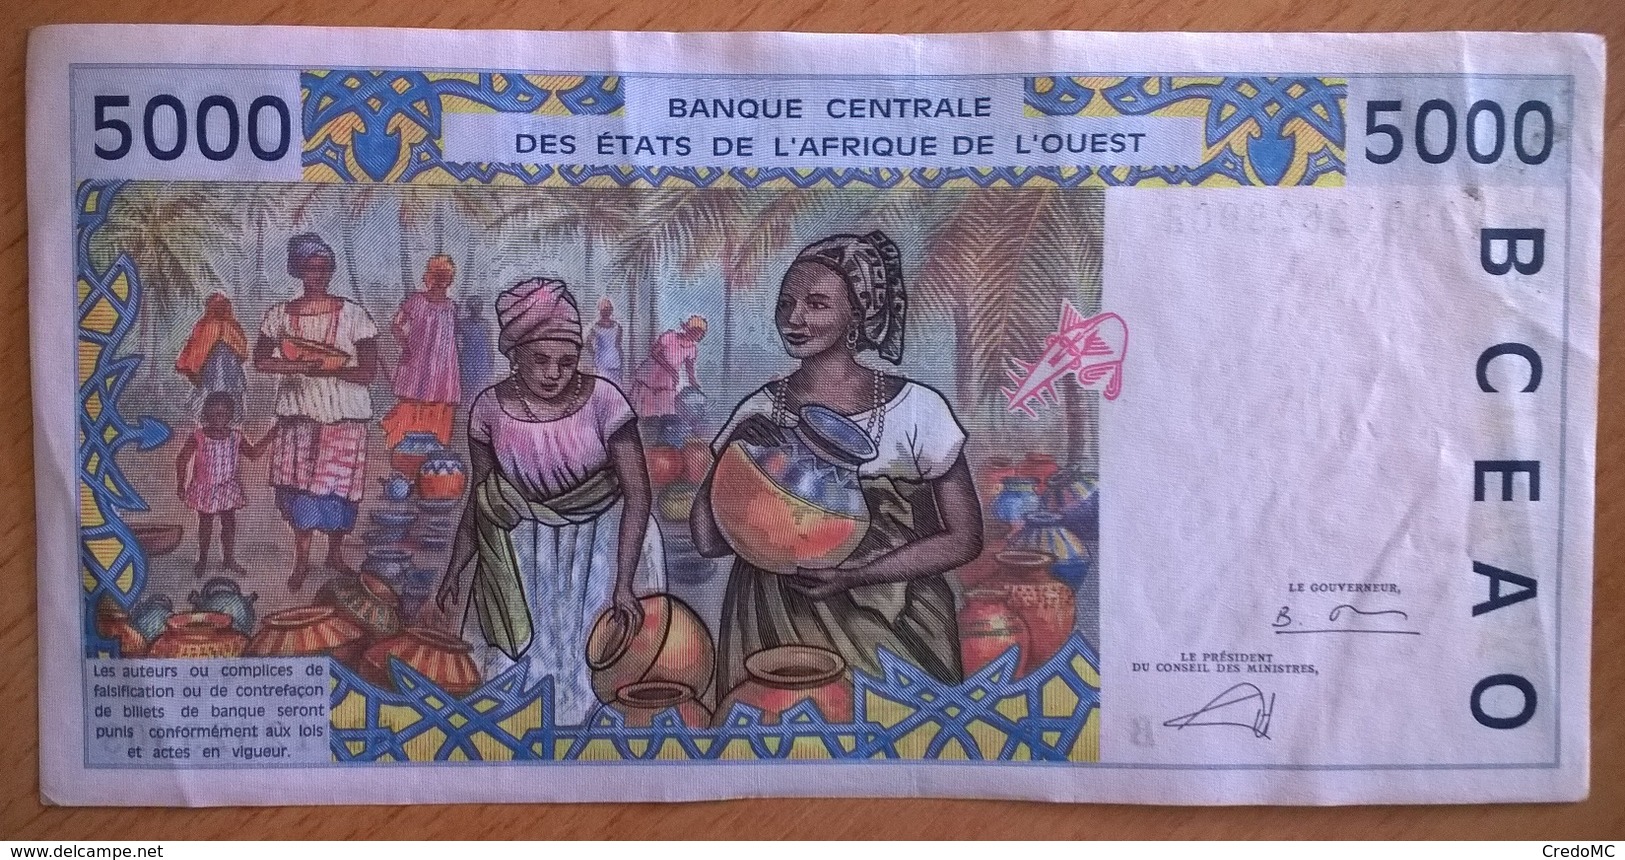 Bénin - 5000 Francs - 2003 - PICK 213 Bm - SUP - West African States